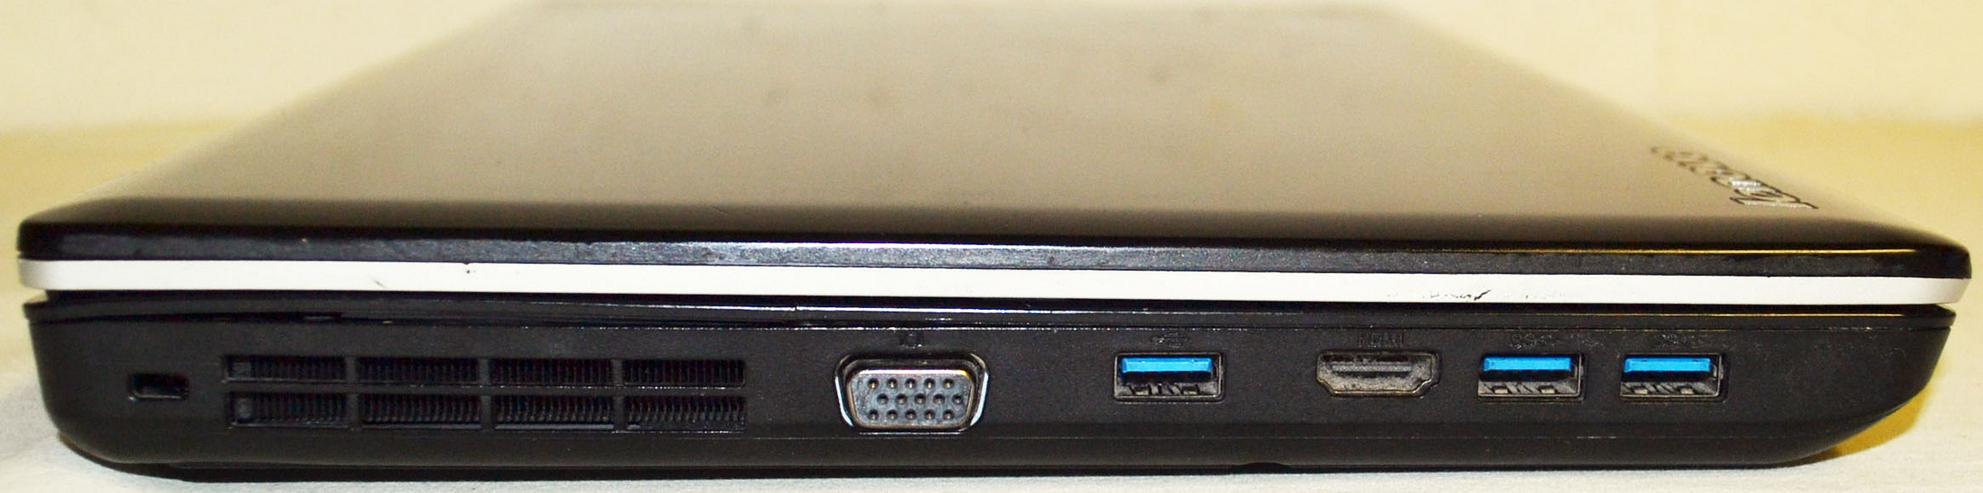 Lenovo ThinkPad E535 15,6" AMD-A8 Quadcore 8GB RAM 128 SSD DVD - Notebooks & Netbooks - Bild 4